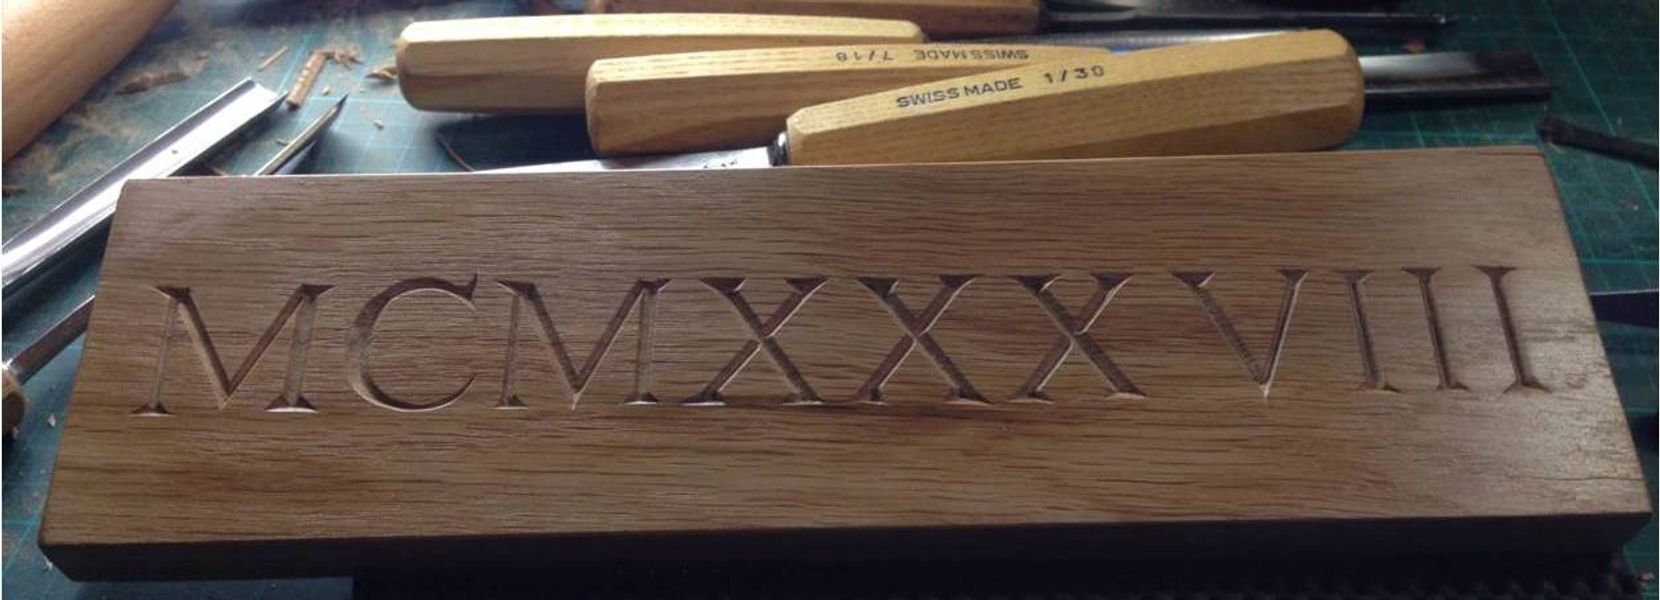 Roman numerals in oak